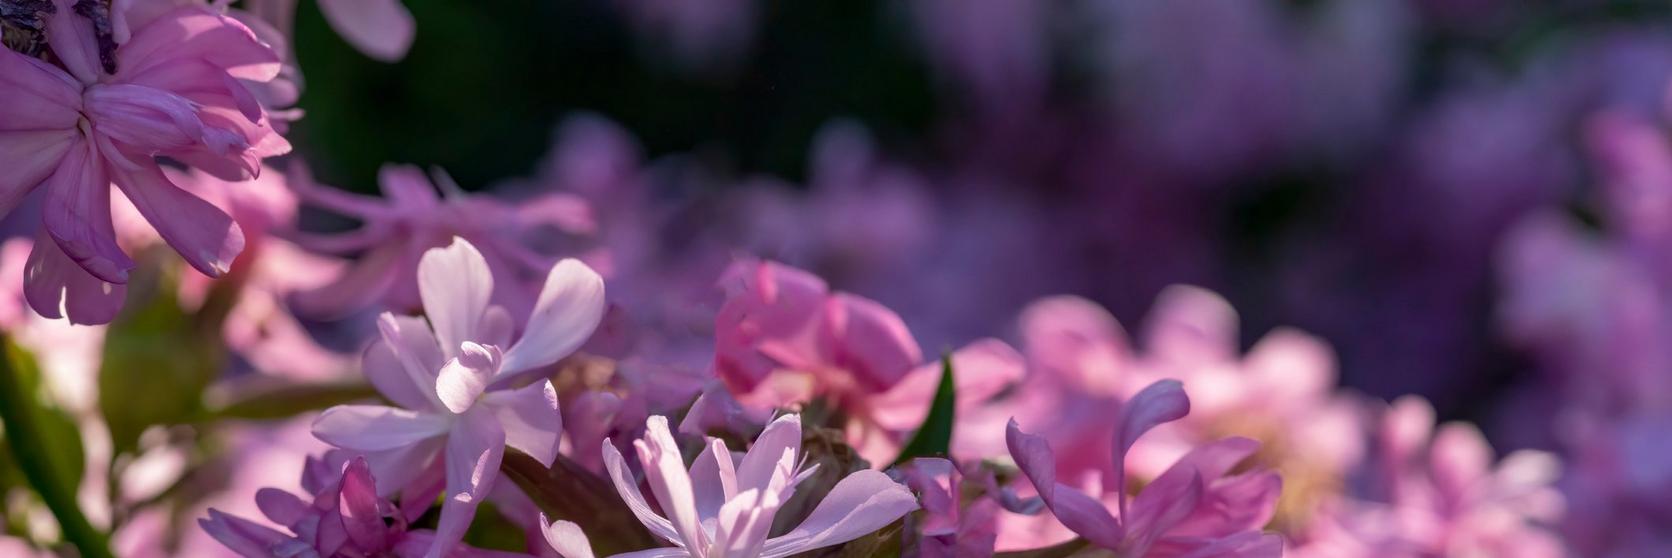 phlox-pink-flowers